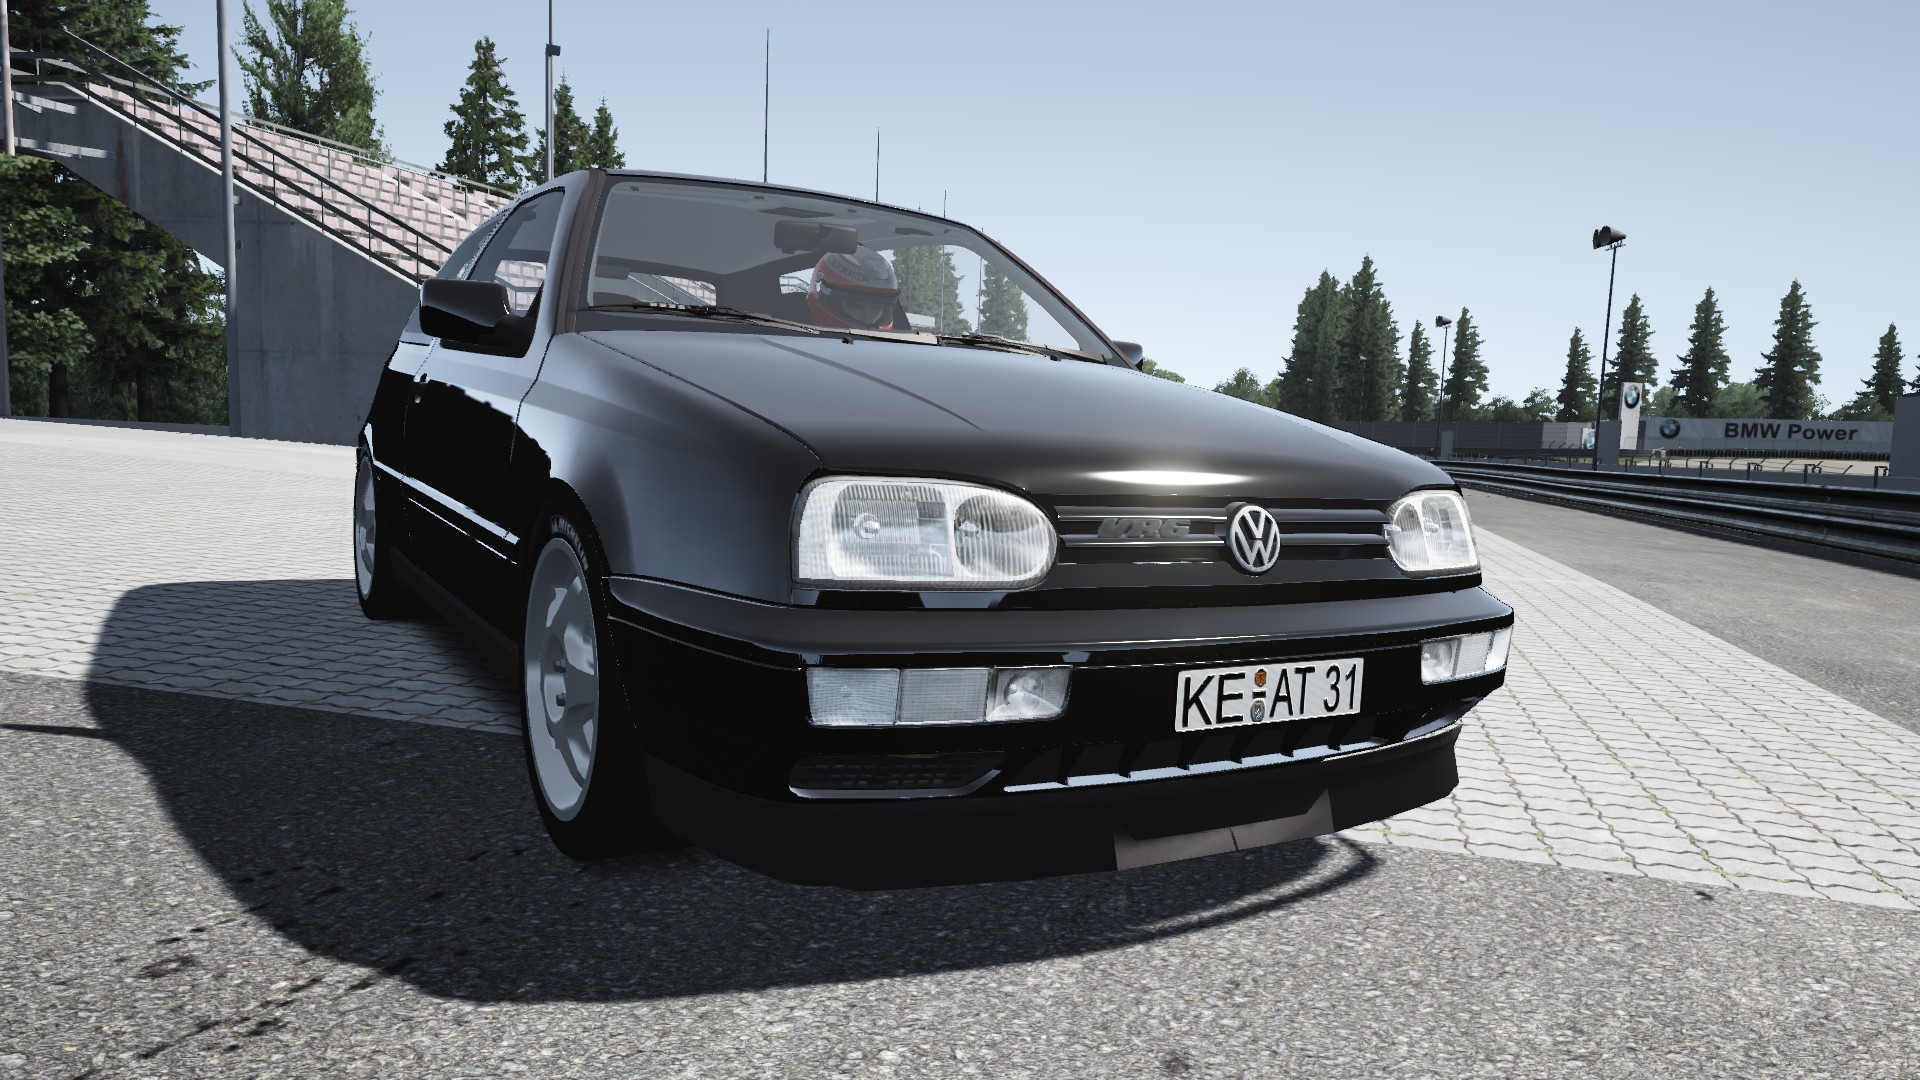 VW Golf III SYNCRO - Volkswagen - Car Detail - Assetto Corsa Database